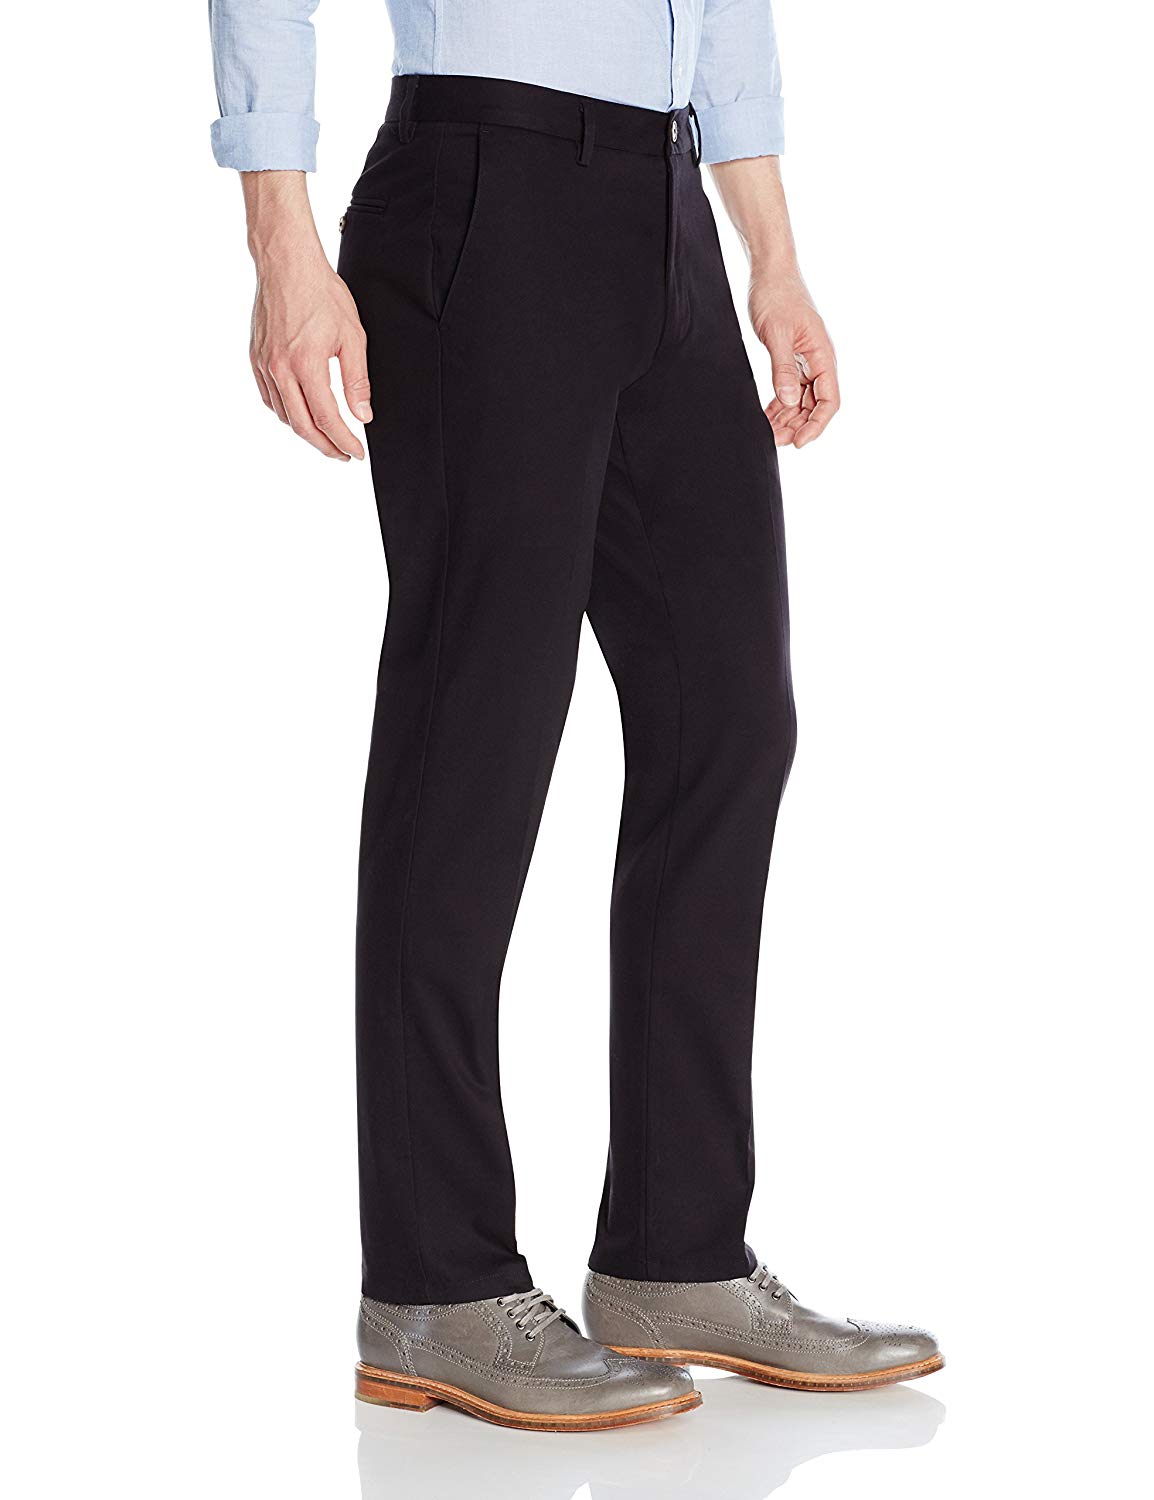 Goodthreads Men/'s Slim-Fit Wrinkle-Free Dress Chino Pant, Black Size 31W x 30L